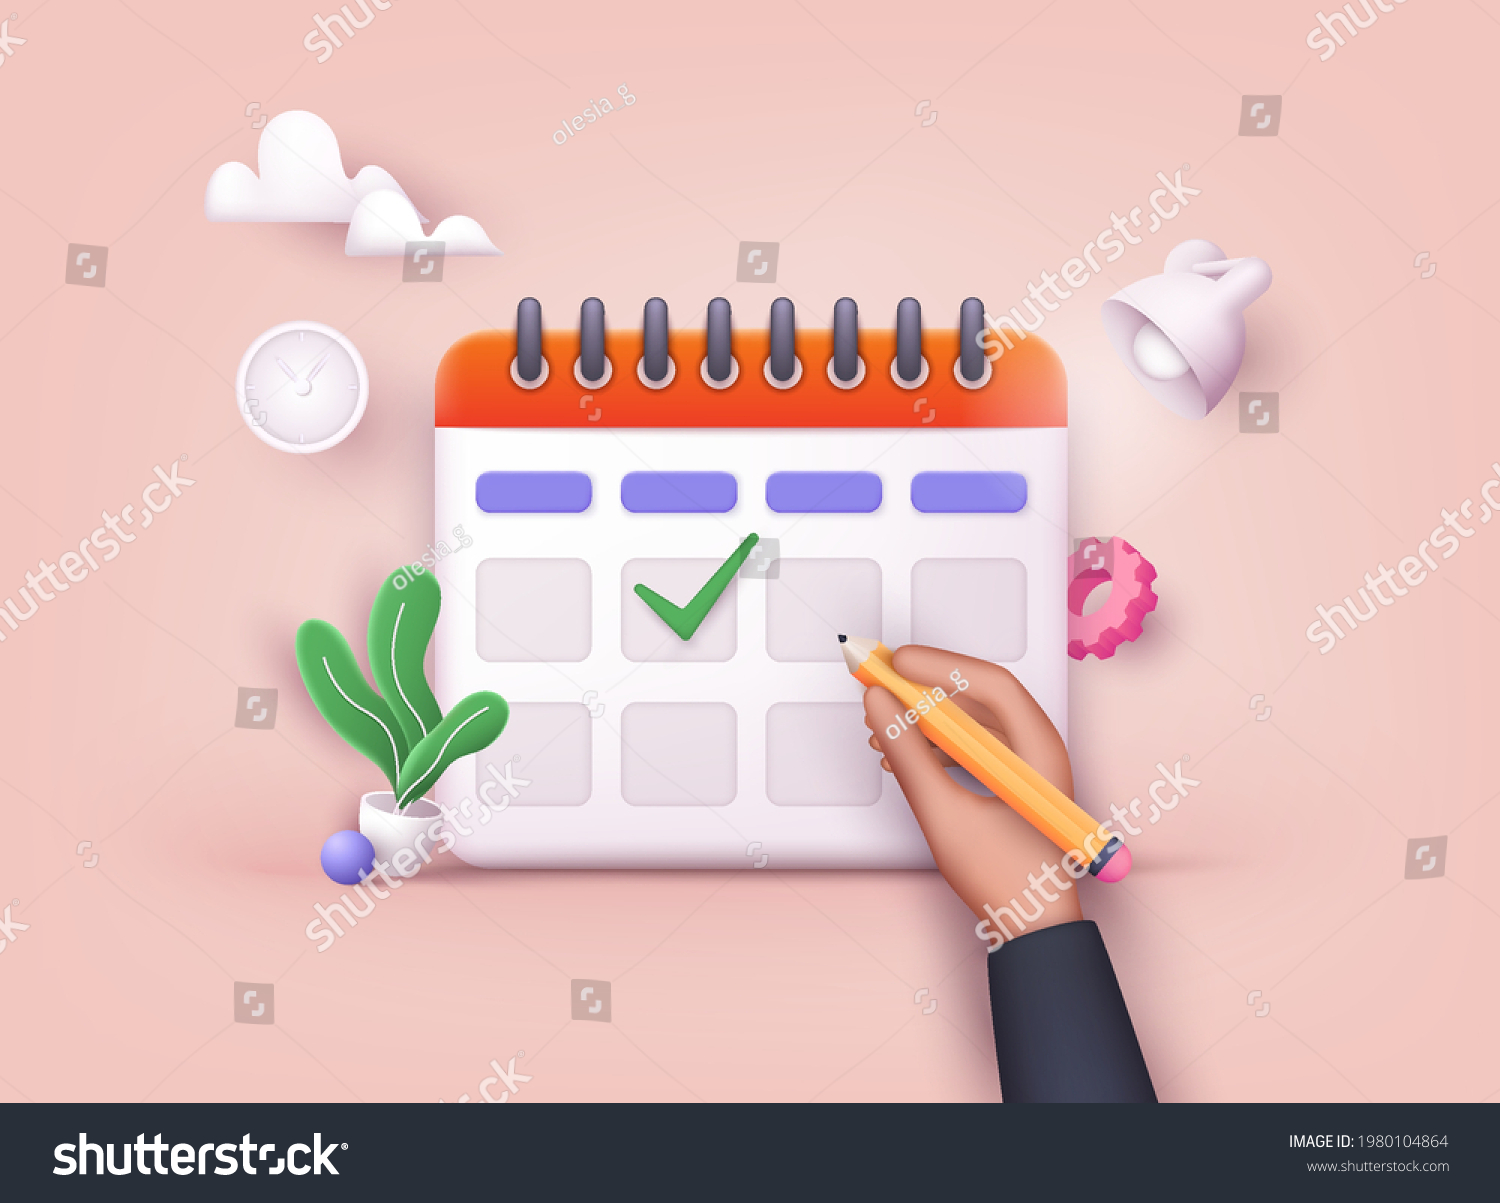 SVG of Hand putting check marks on calendar. 3D Web Vector Illustrations. svg